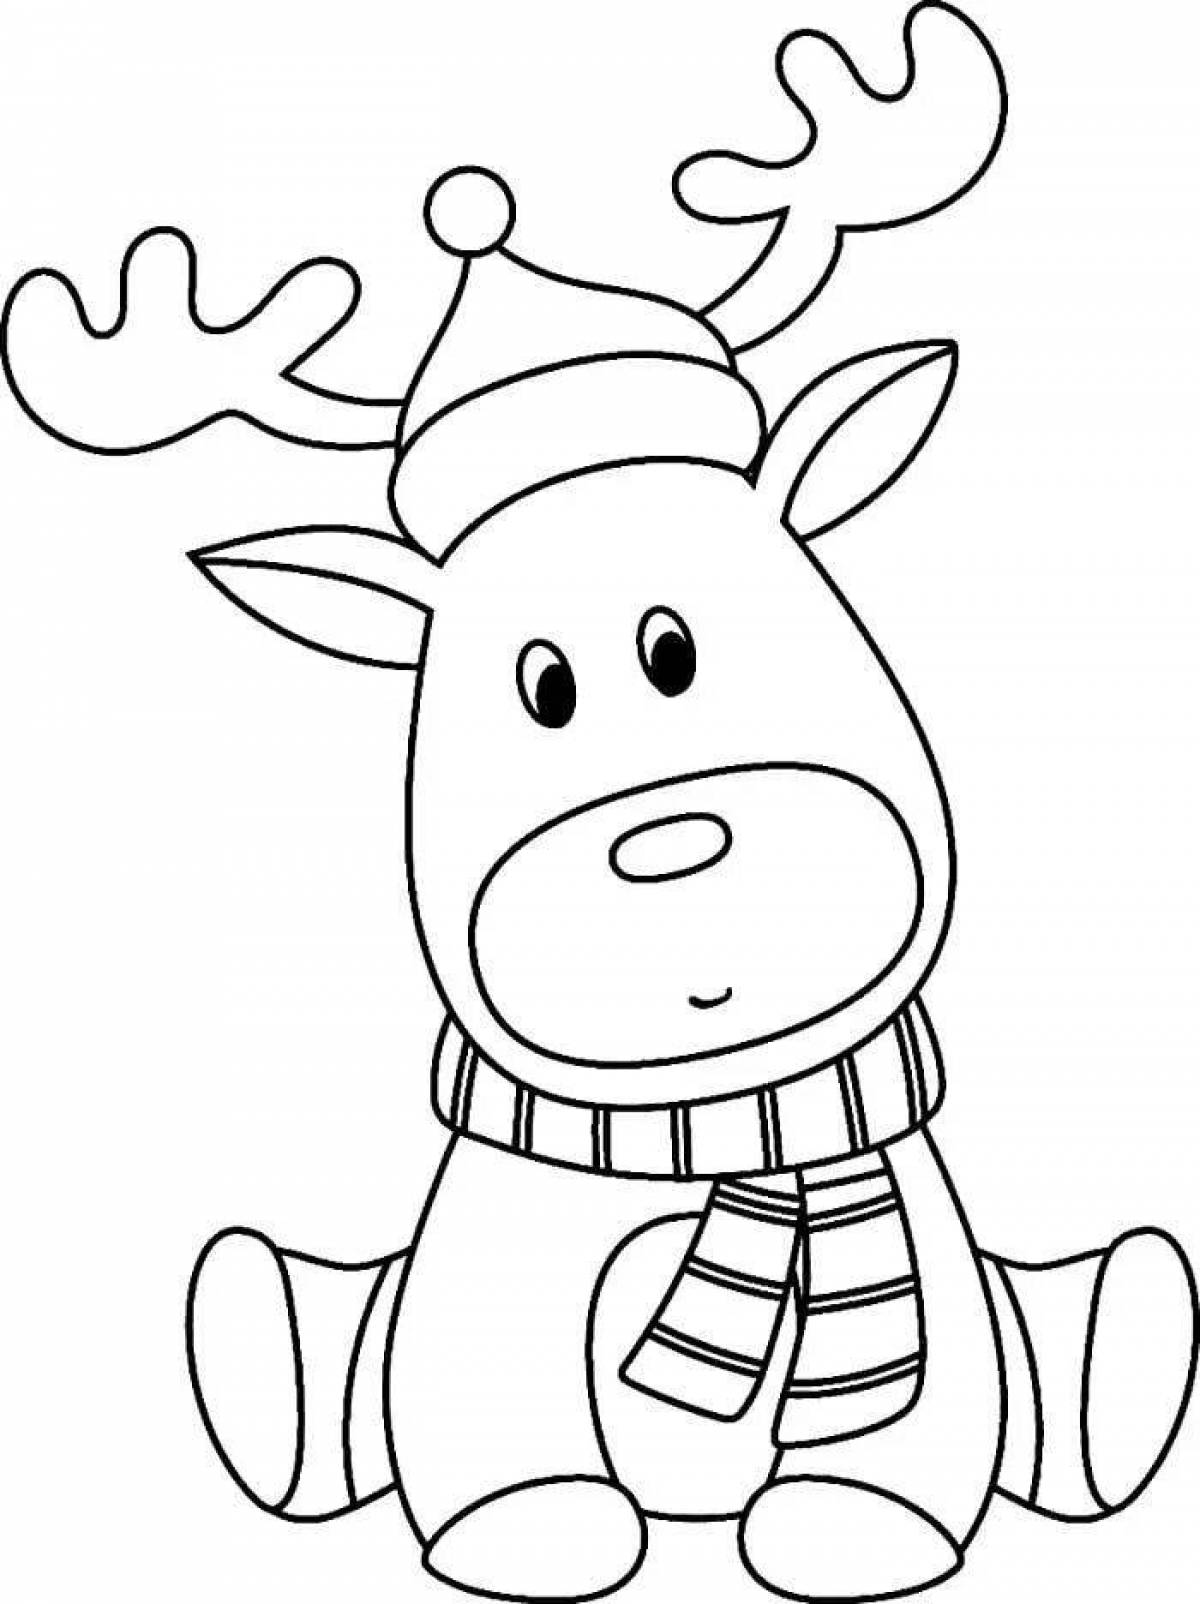 Playful Christmas reindeer